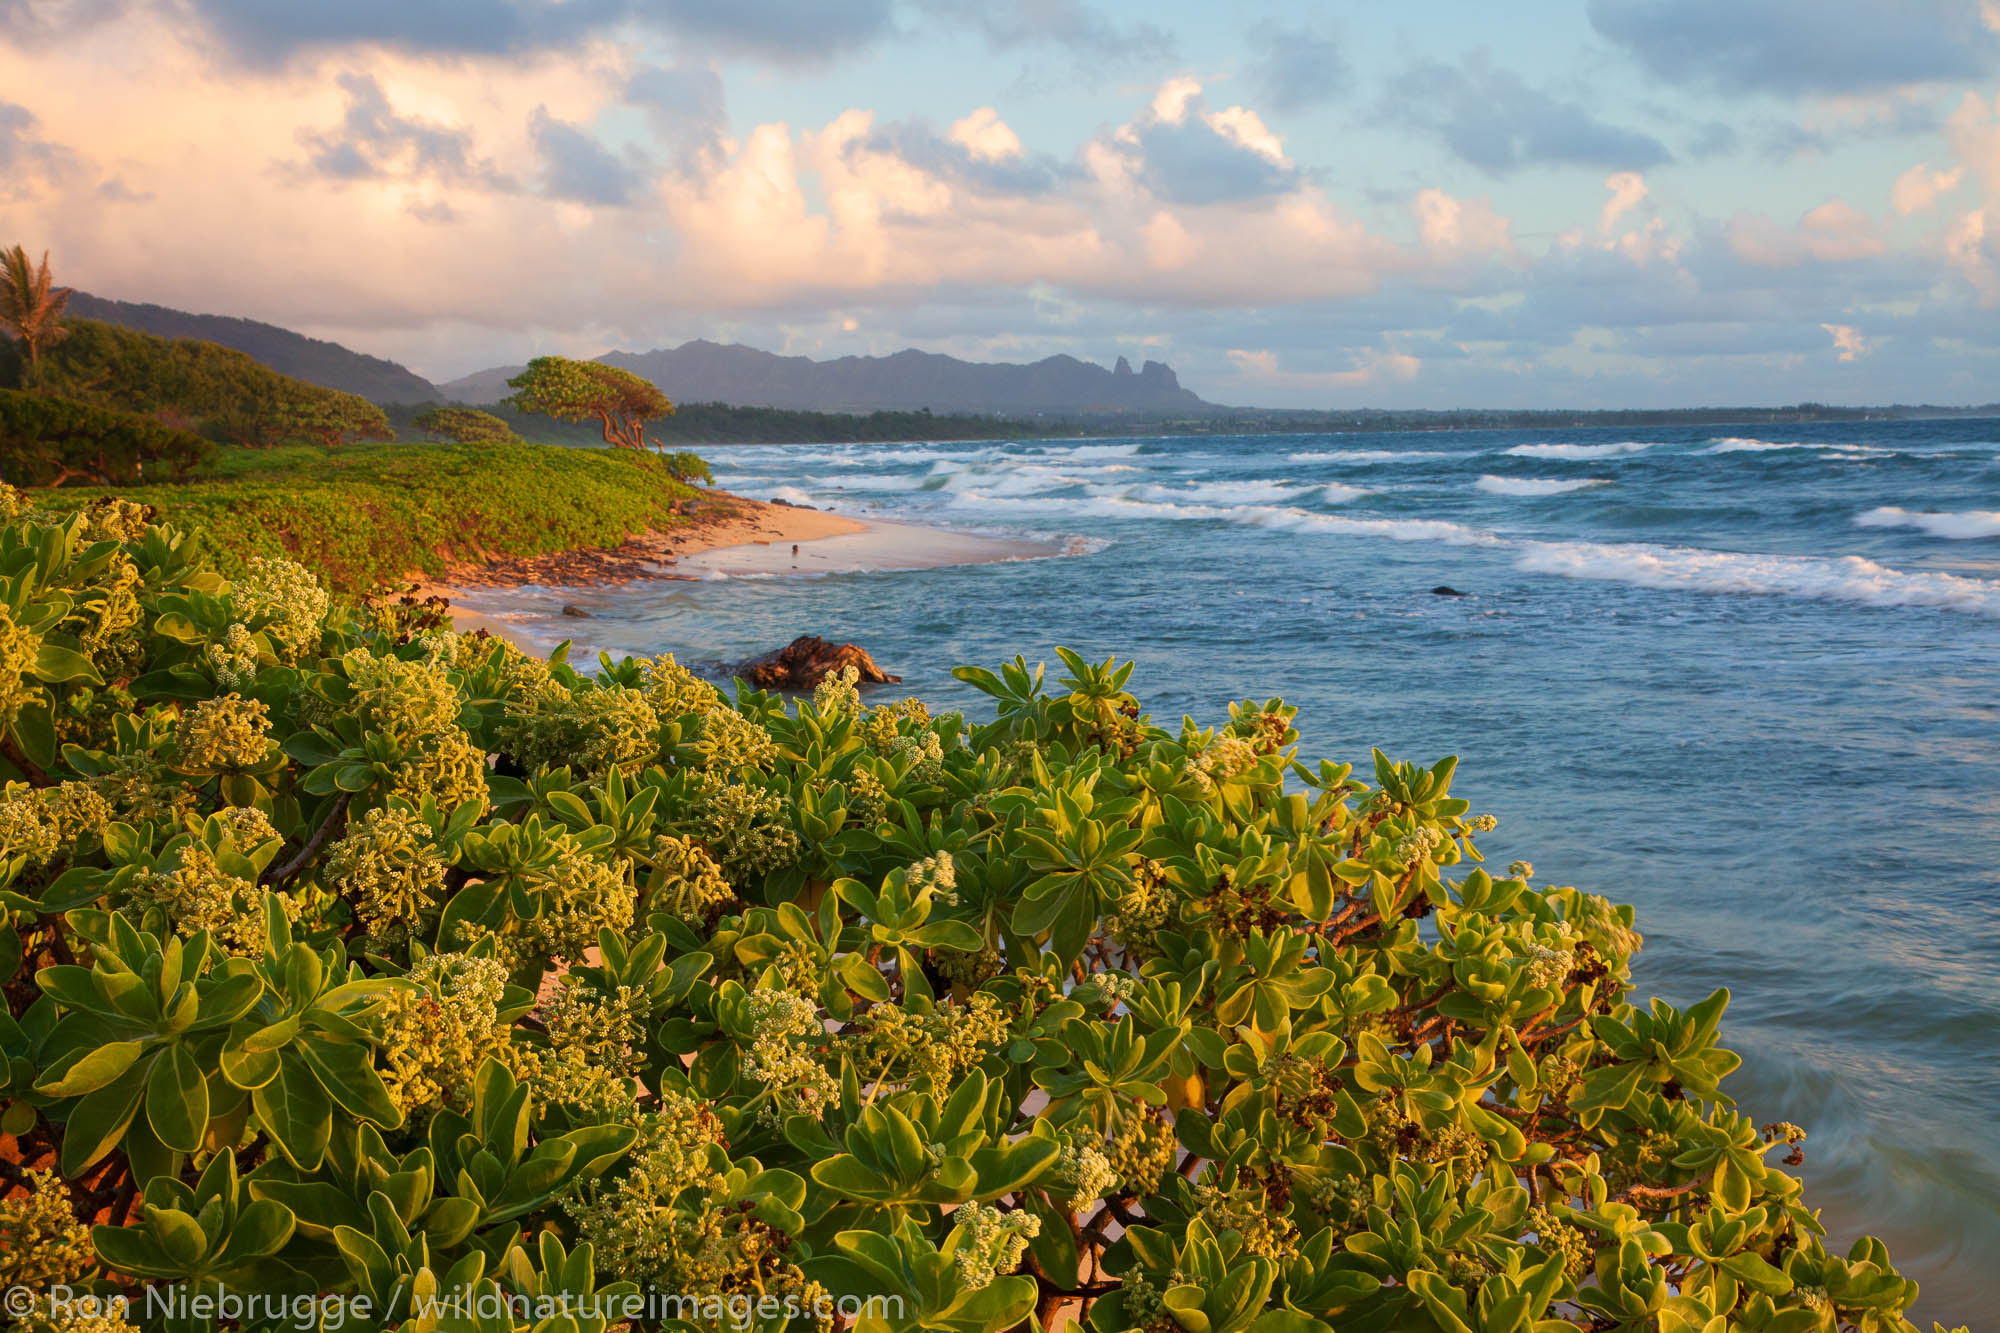 Nukoli'i Beach, also known as Kitchens Beach, Lihu'e, Kauai, Hawaii.